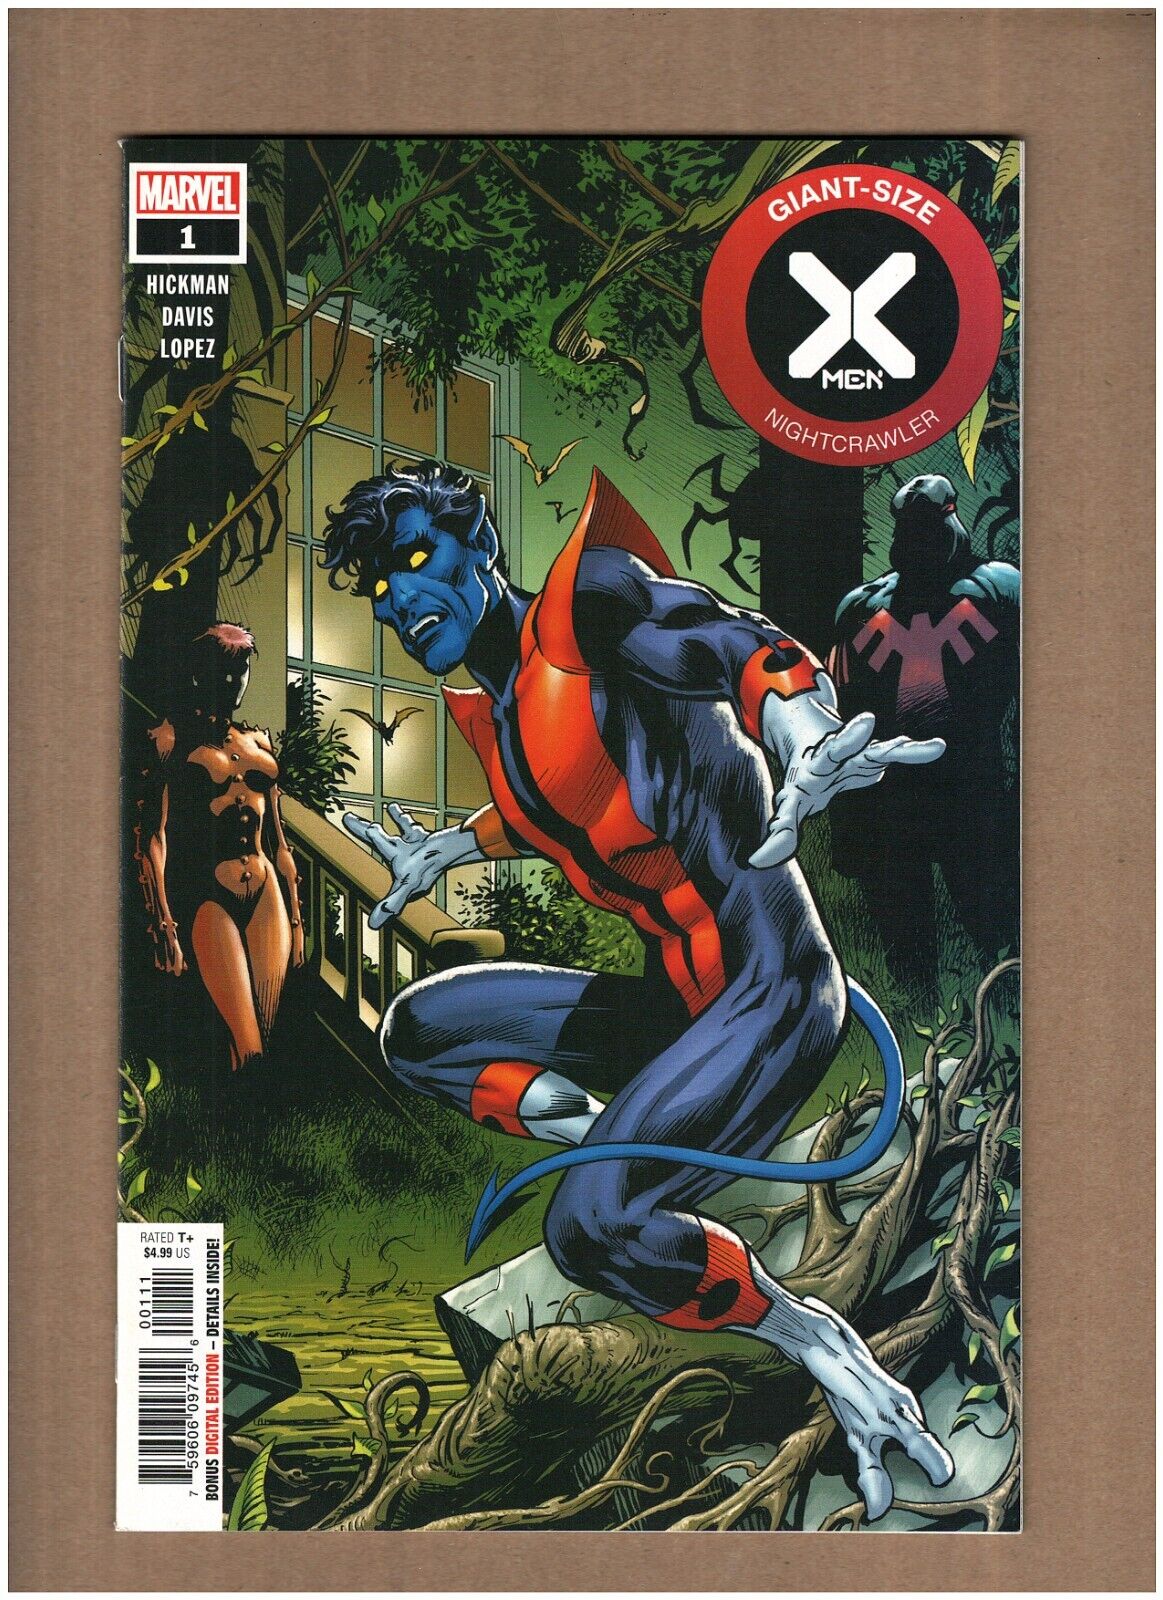 Giant-Size X-men: Nightcrawler #1 Marvel Comics 2020 Jonathan Hickman NM- 9.2